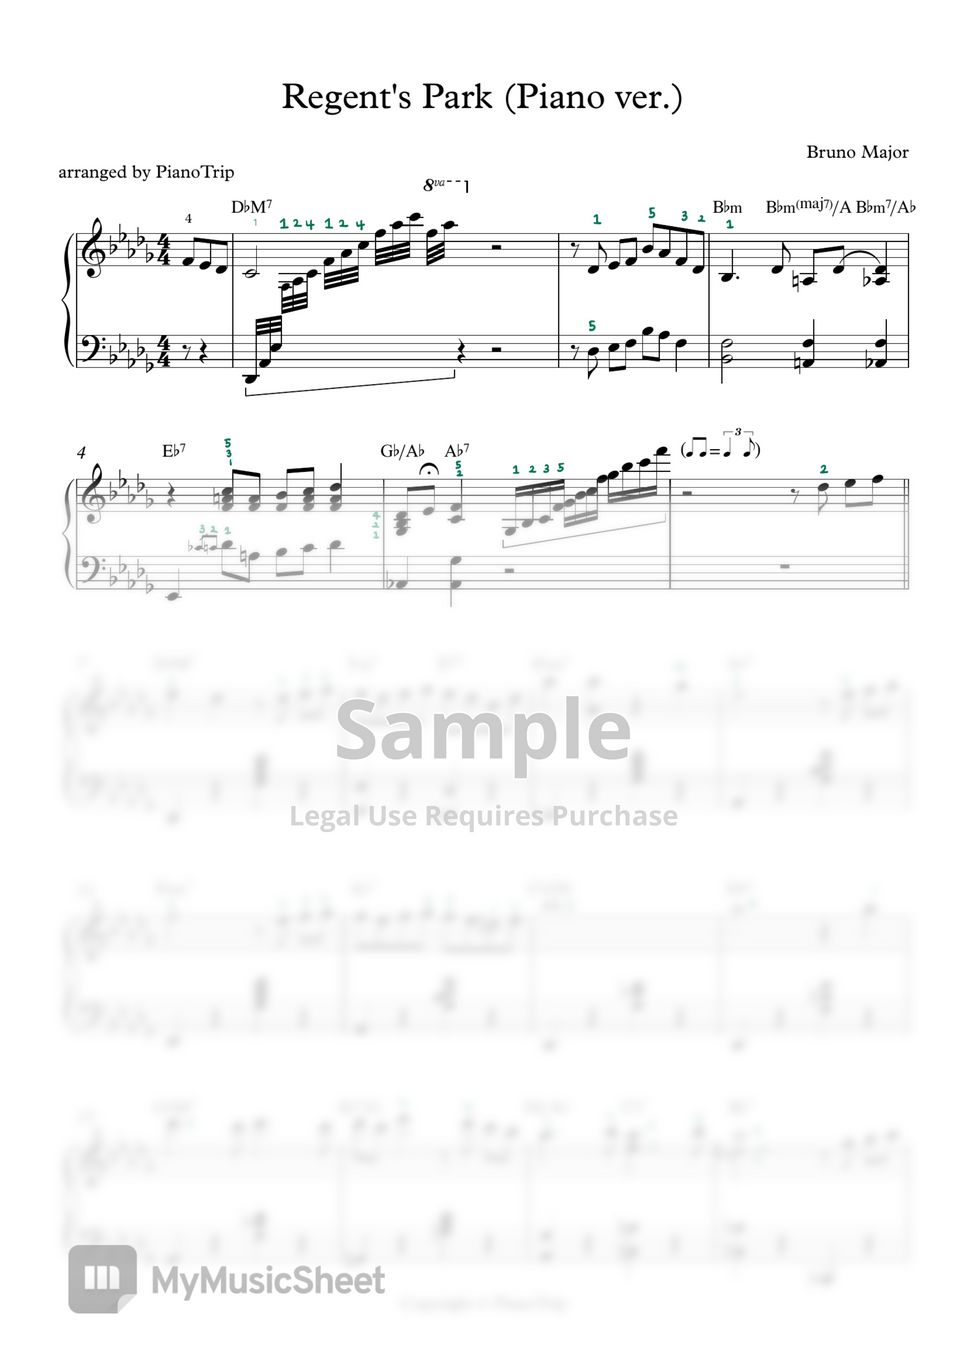 Bruno Major - Regent's Park (Piano ver.) by PianoTrip